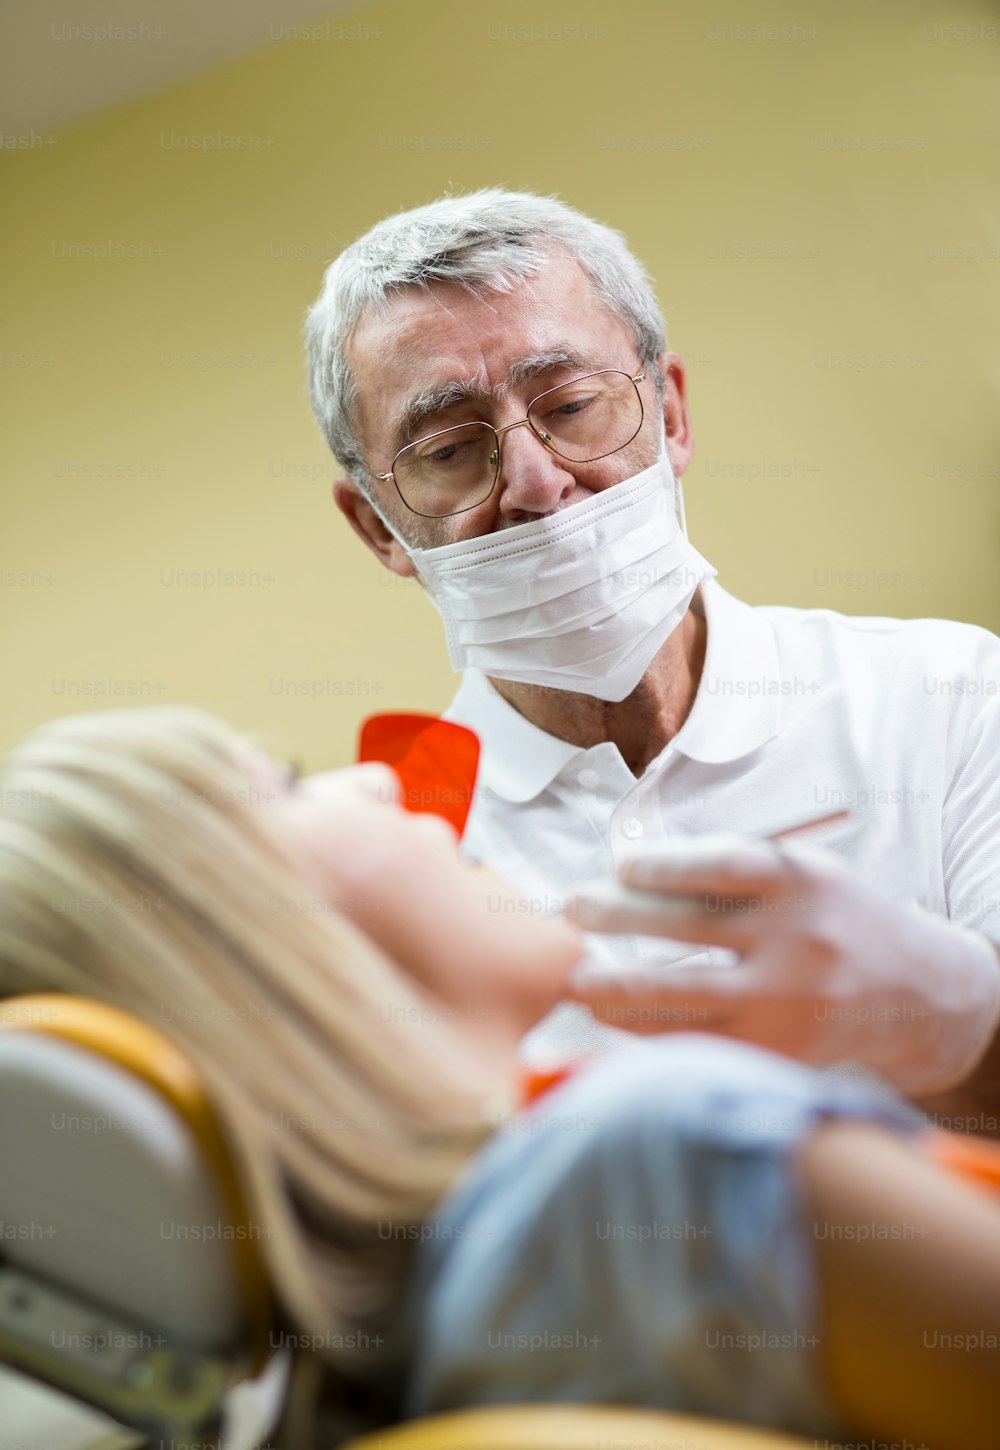 Patient is having a dental treatment